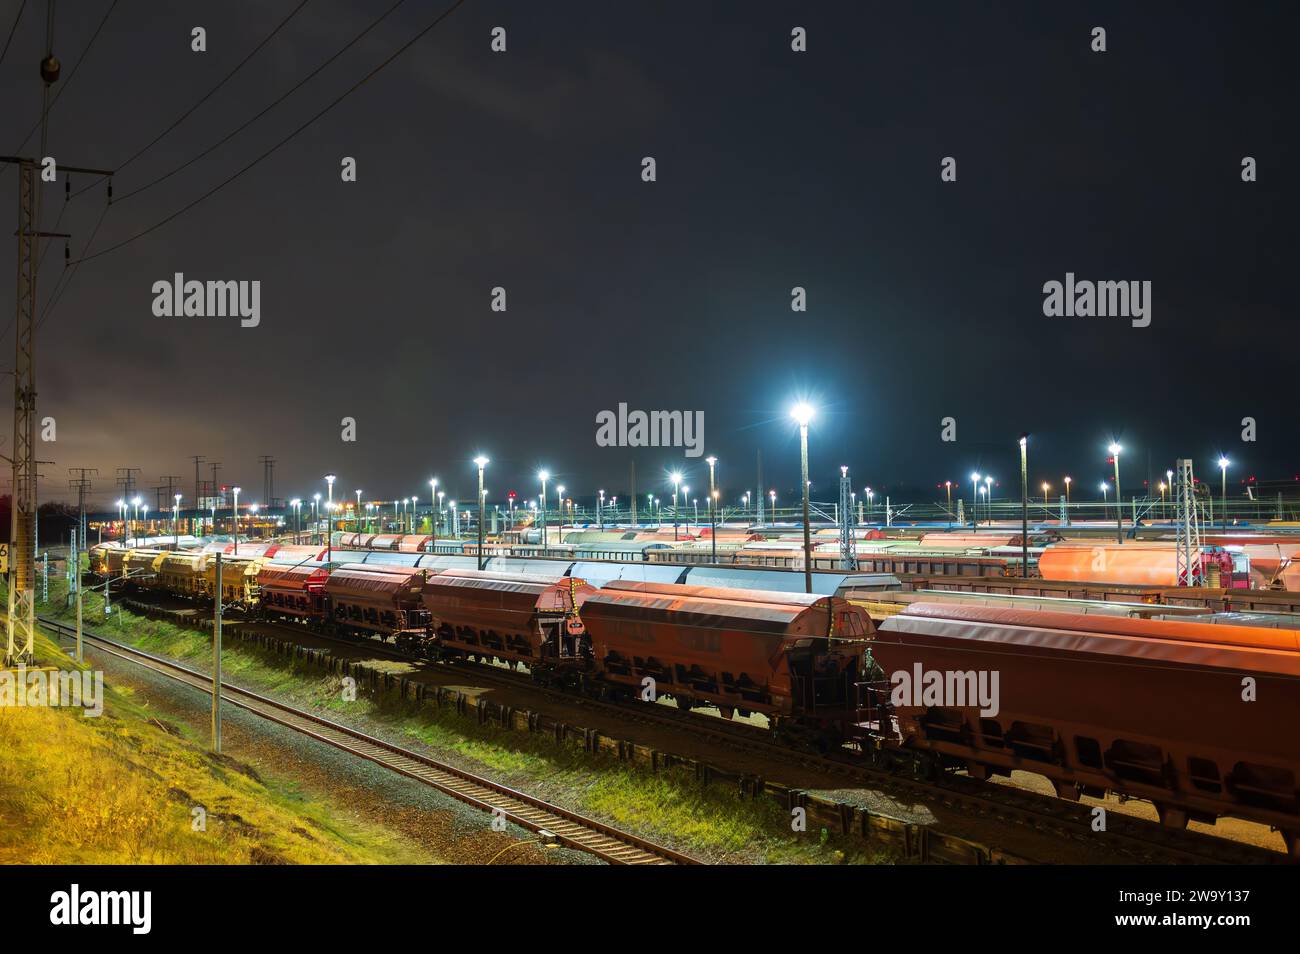 Freight wagon at night at a station Stock Photo